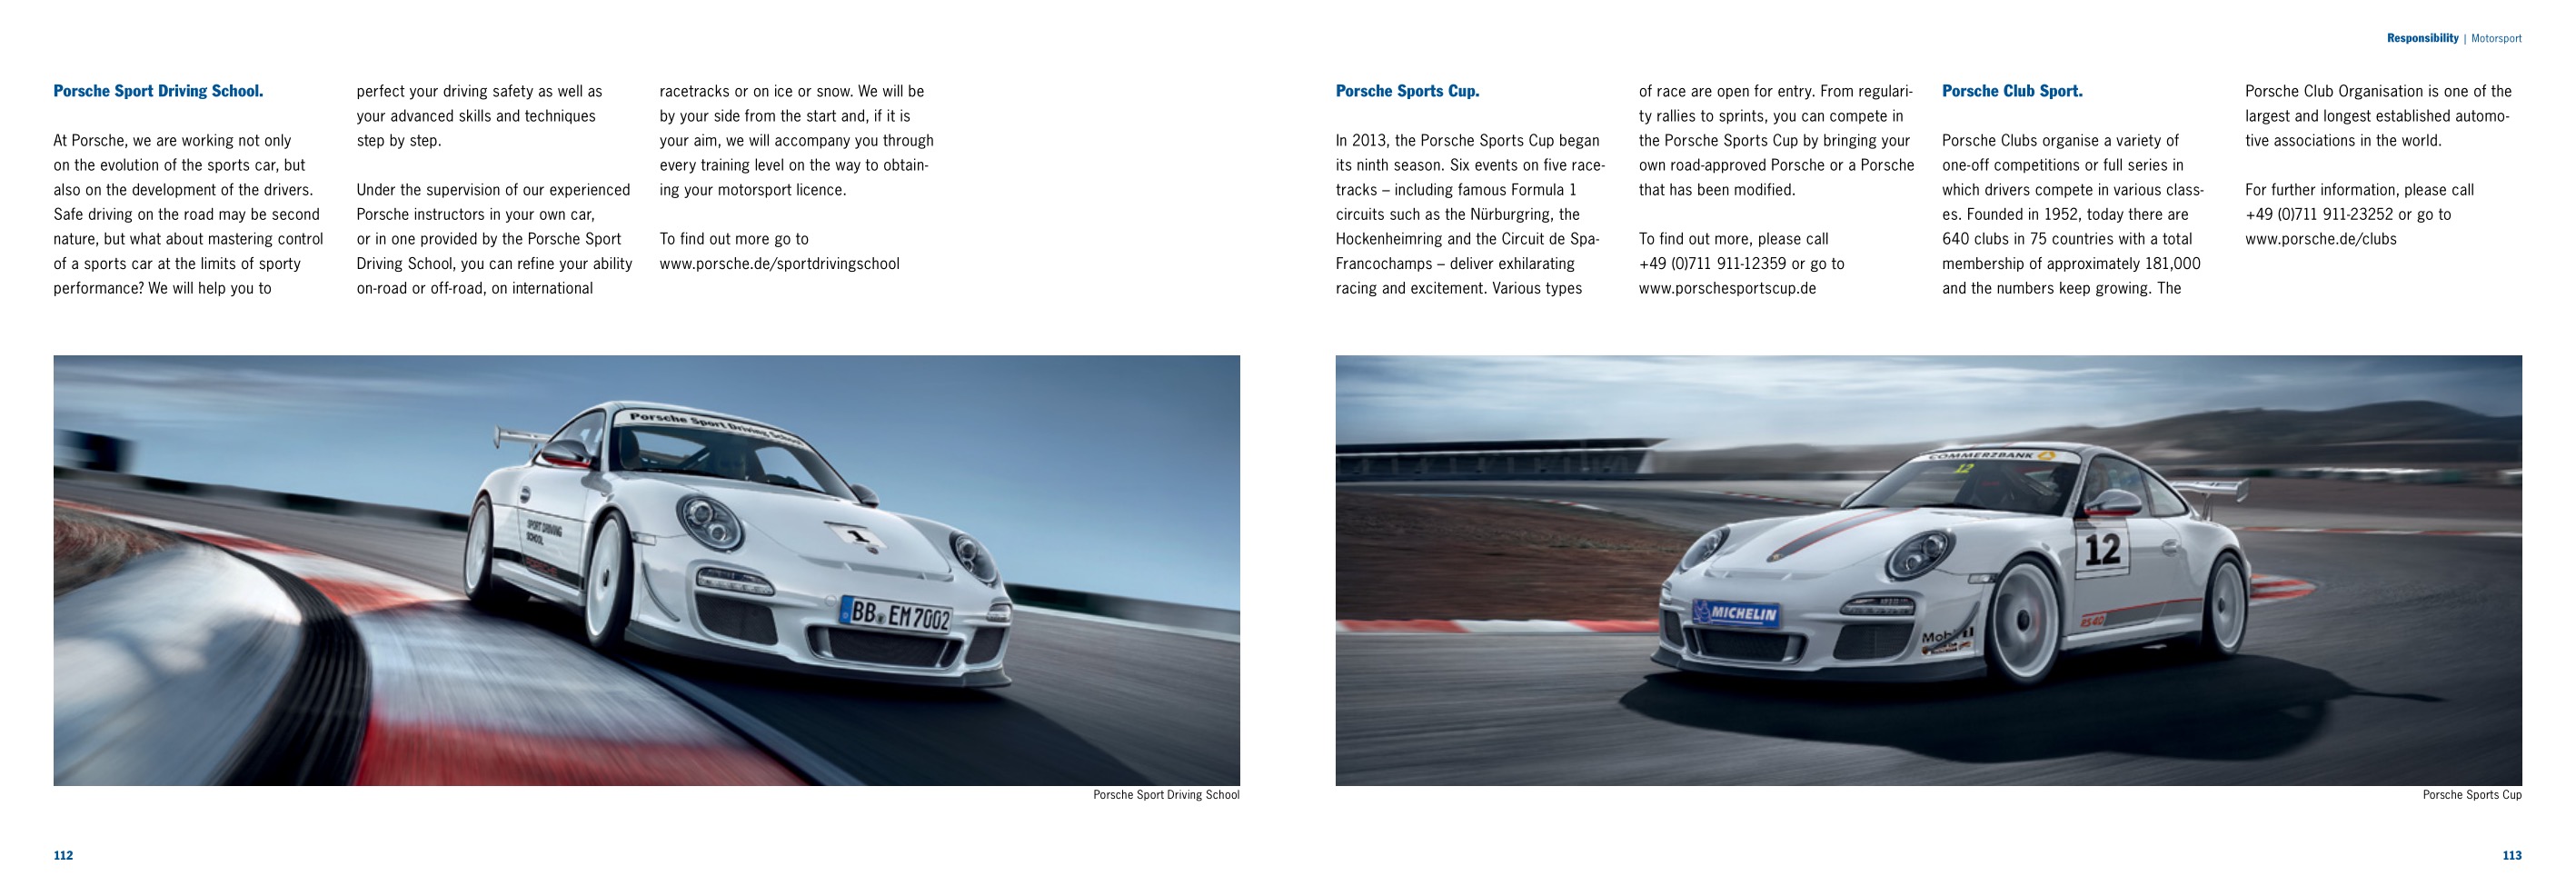 2014 Porsche 911 Brochure Page 6